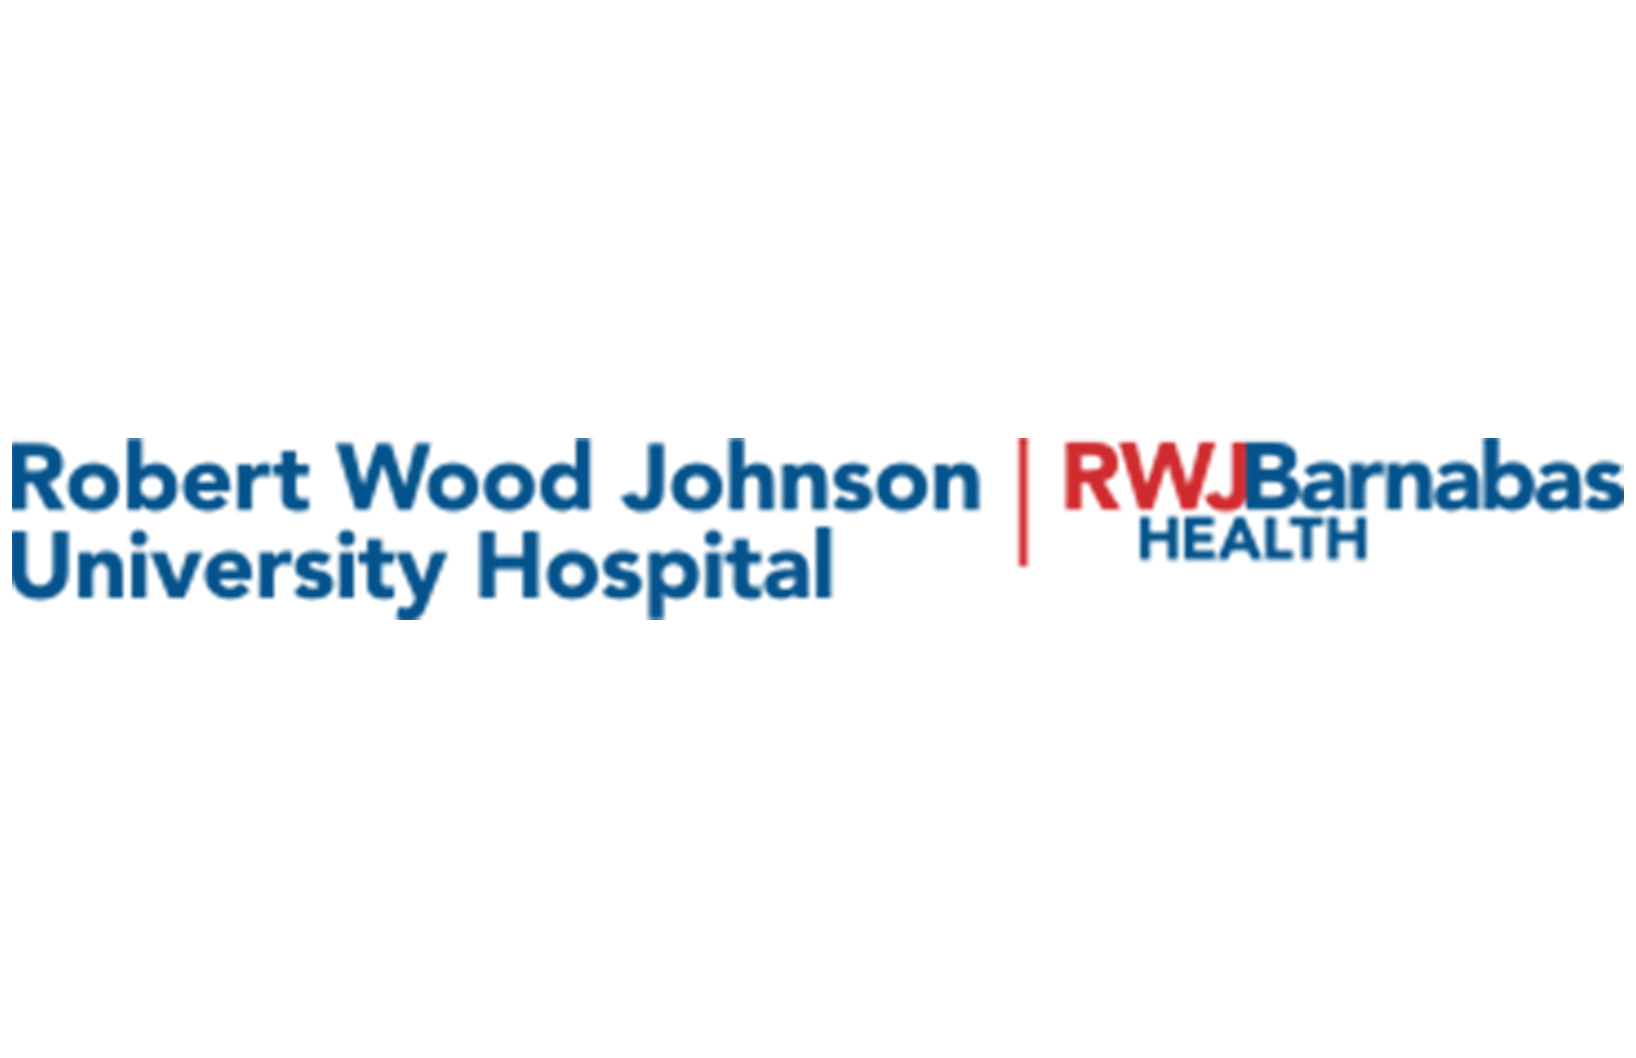 RObert Wood Johnson University Hospital